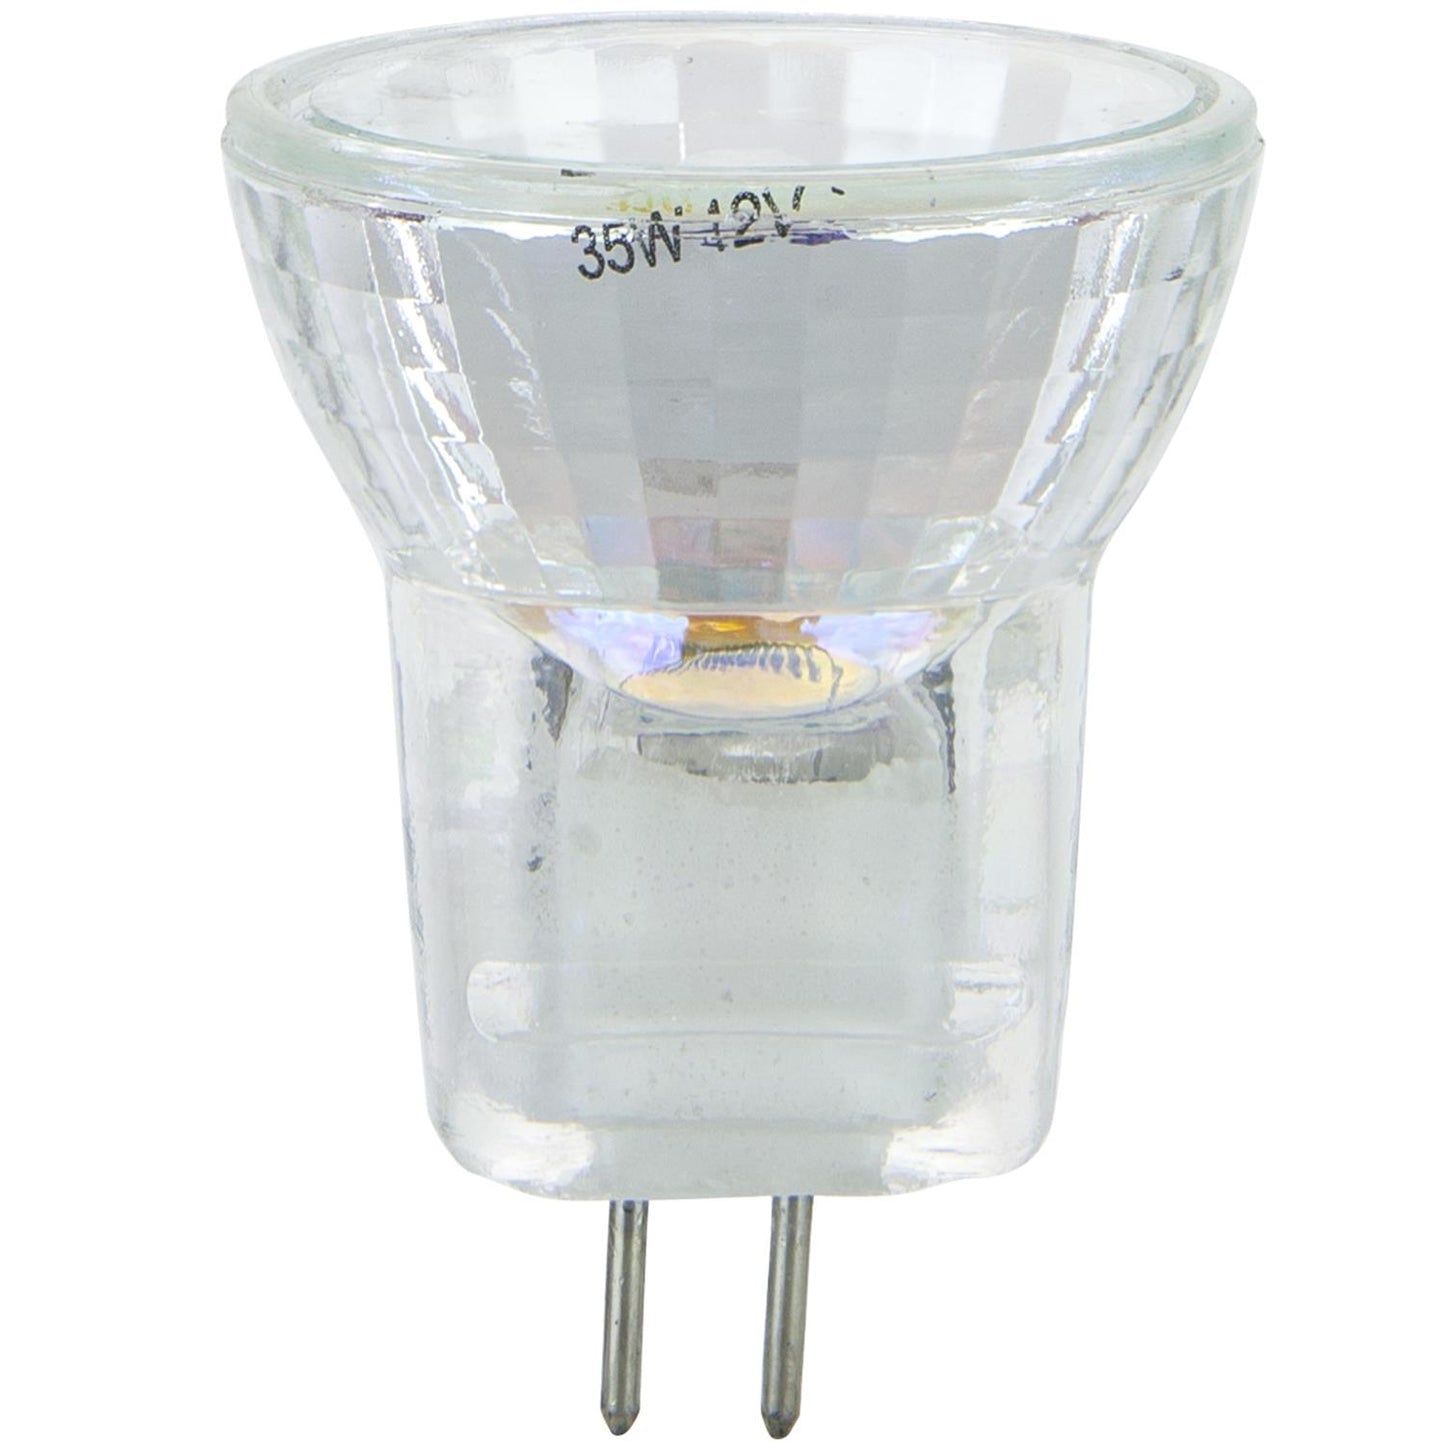 Sunlite 35 Watt, 10° Spot, MR8 Mini Reflector with Cover Guard, G4 Bi-Pin Base (12 Pack)